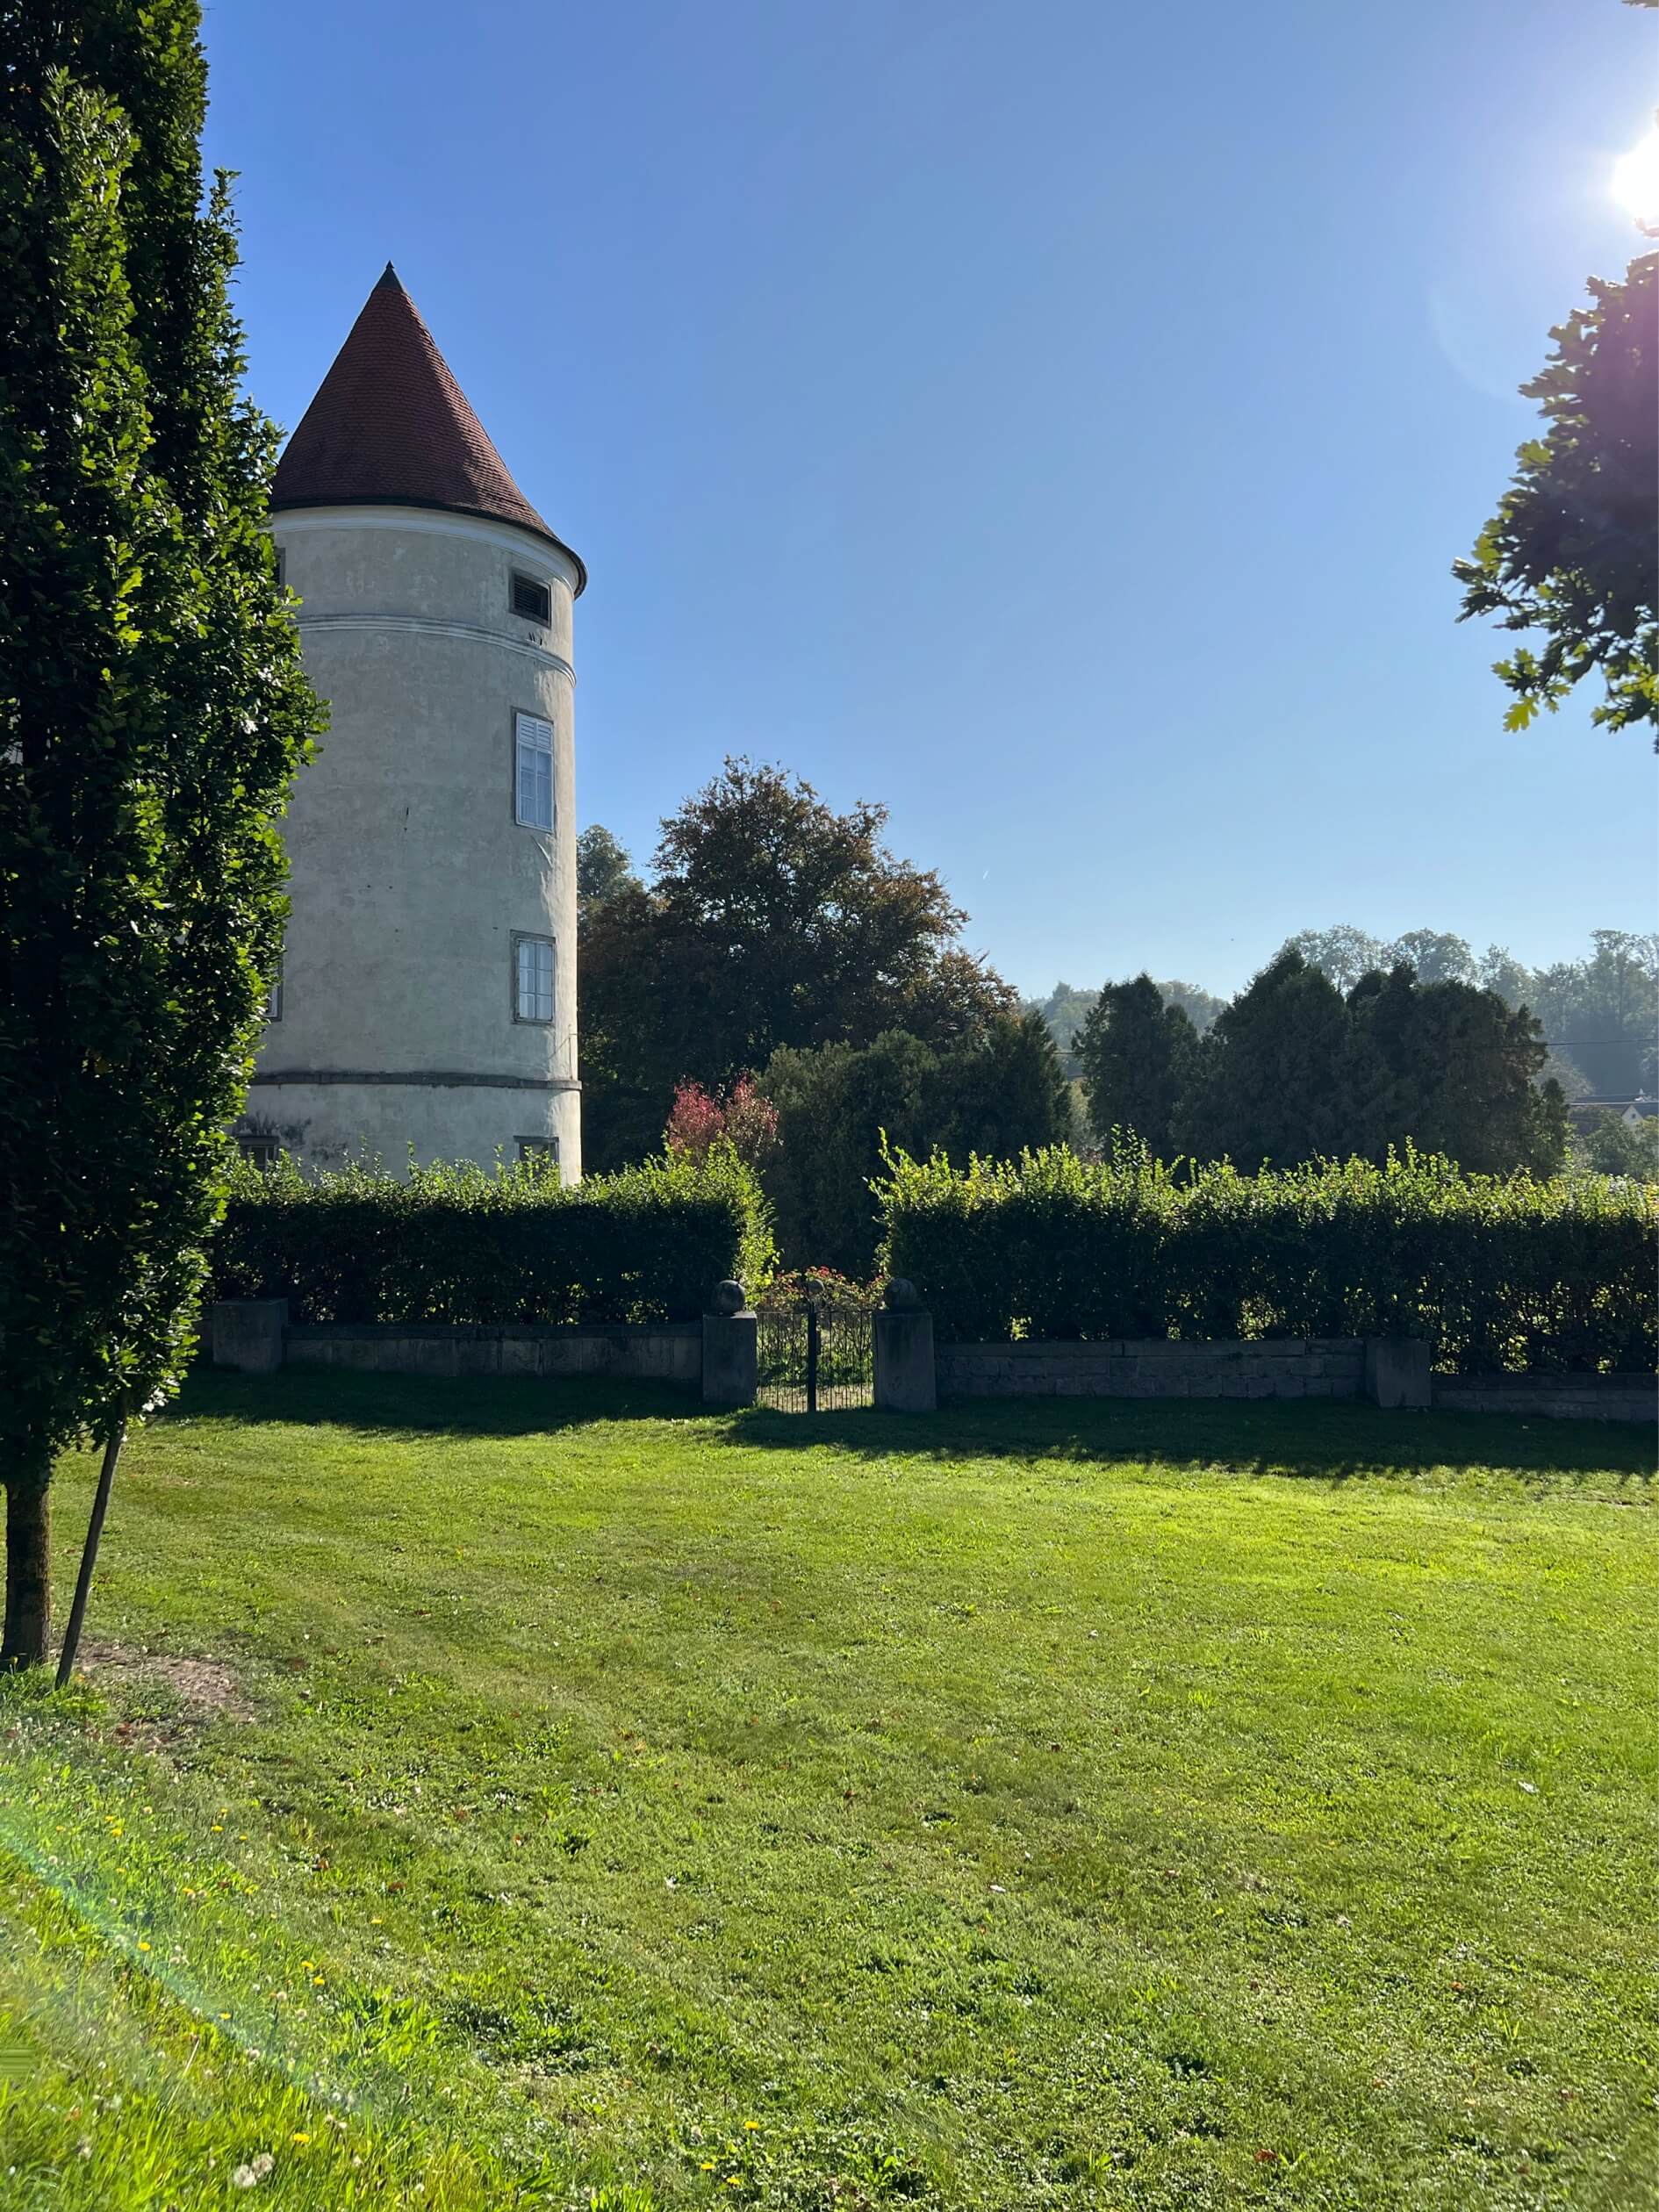 Schloss-Blick-von-Strasse-Turm-schloss-schwertberg